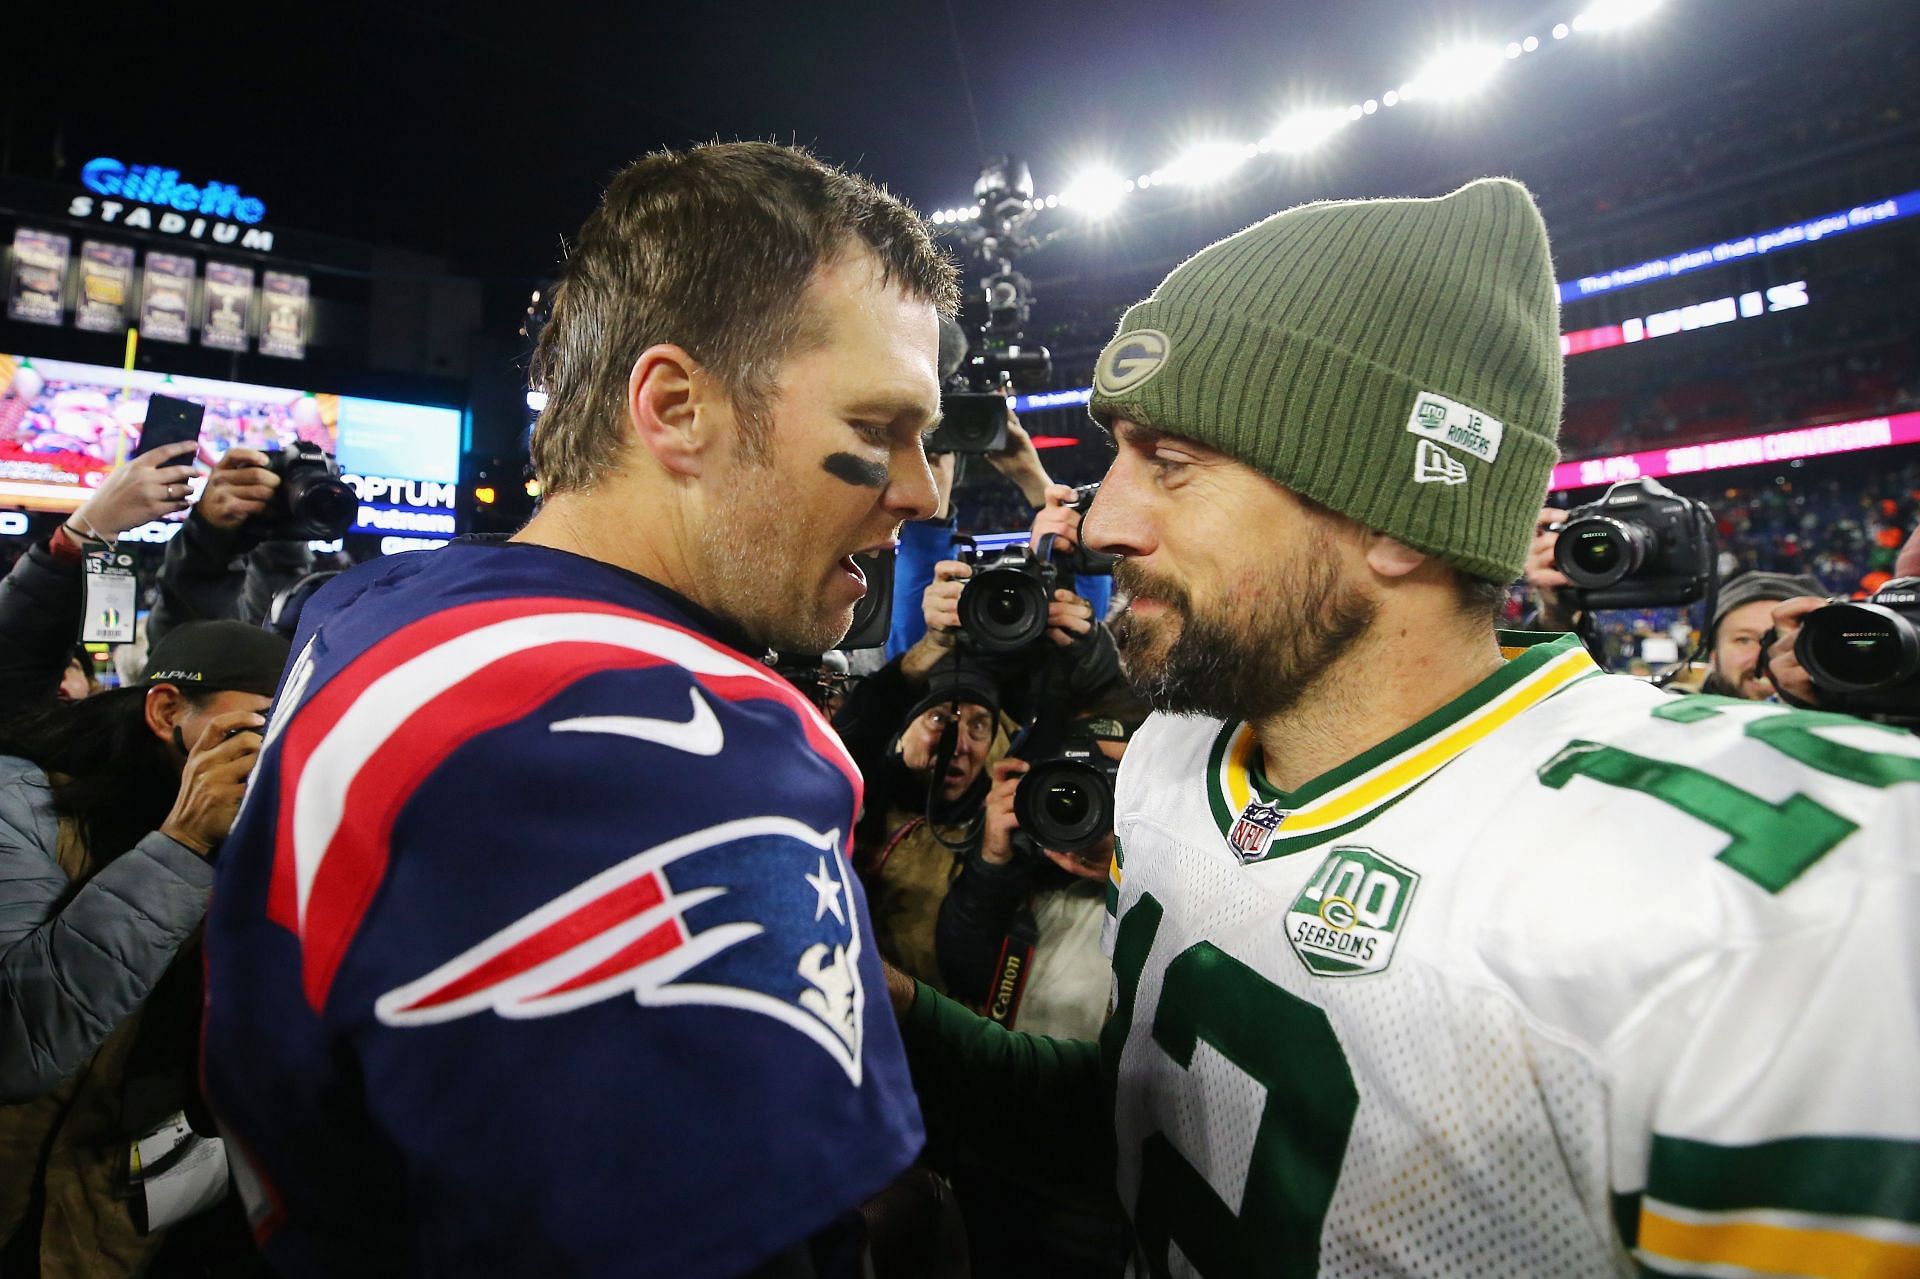 Legendary NFL quarterbacks Tom Brady and Aaron Rodgers